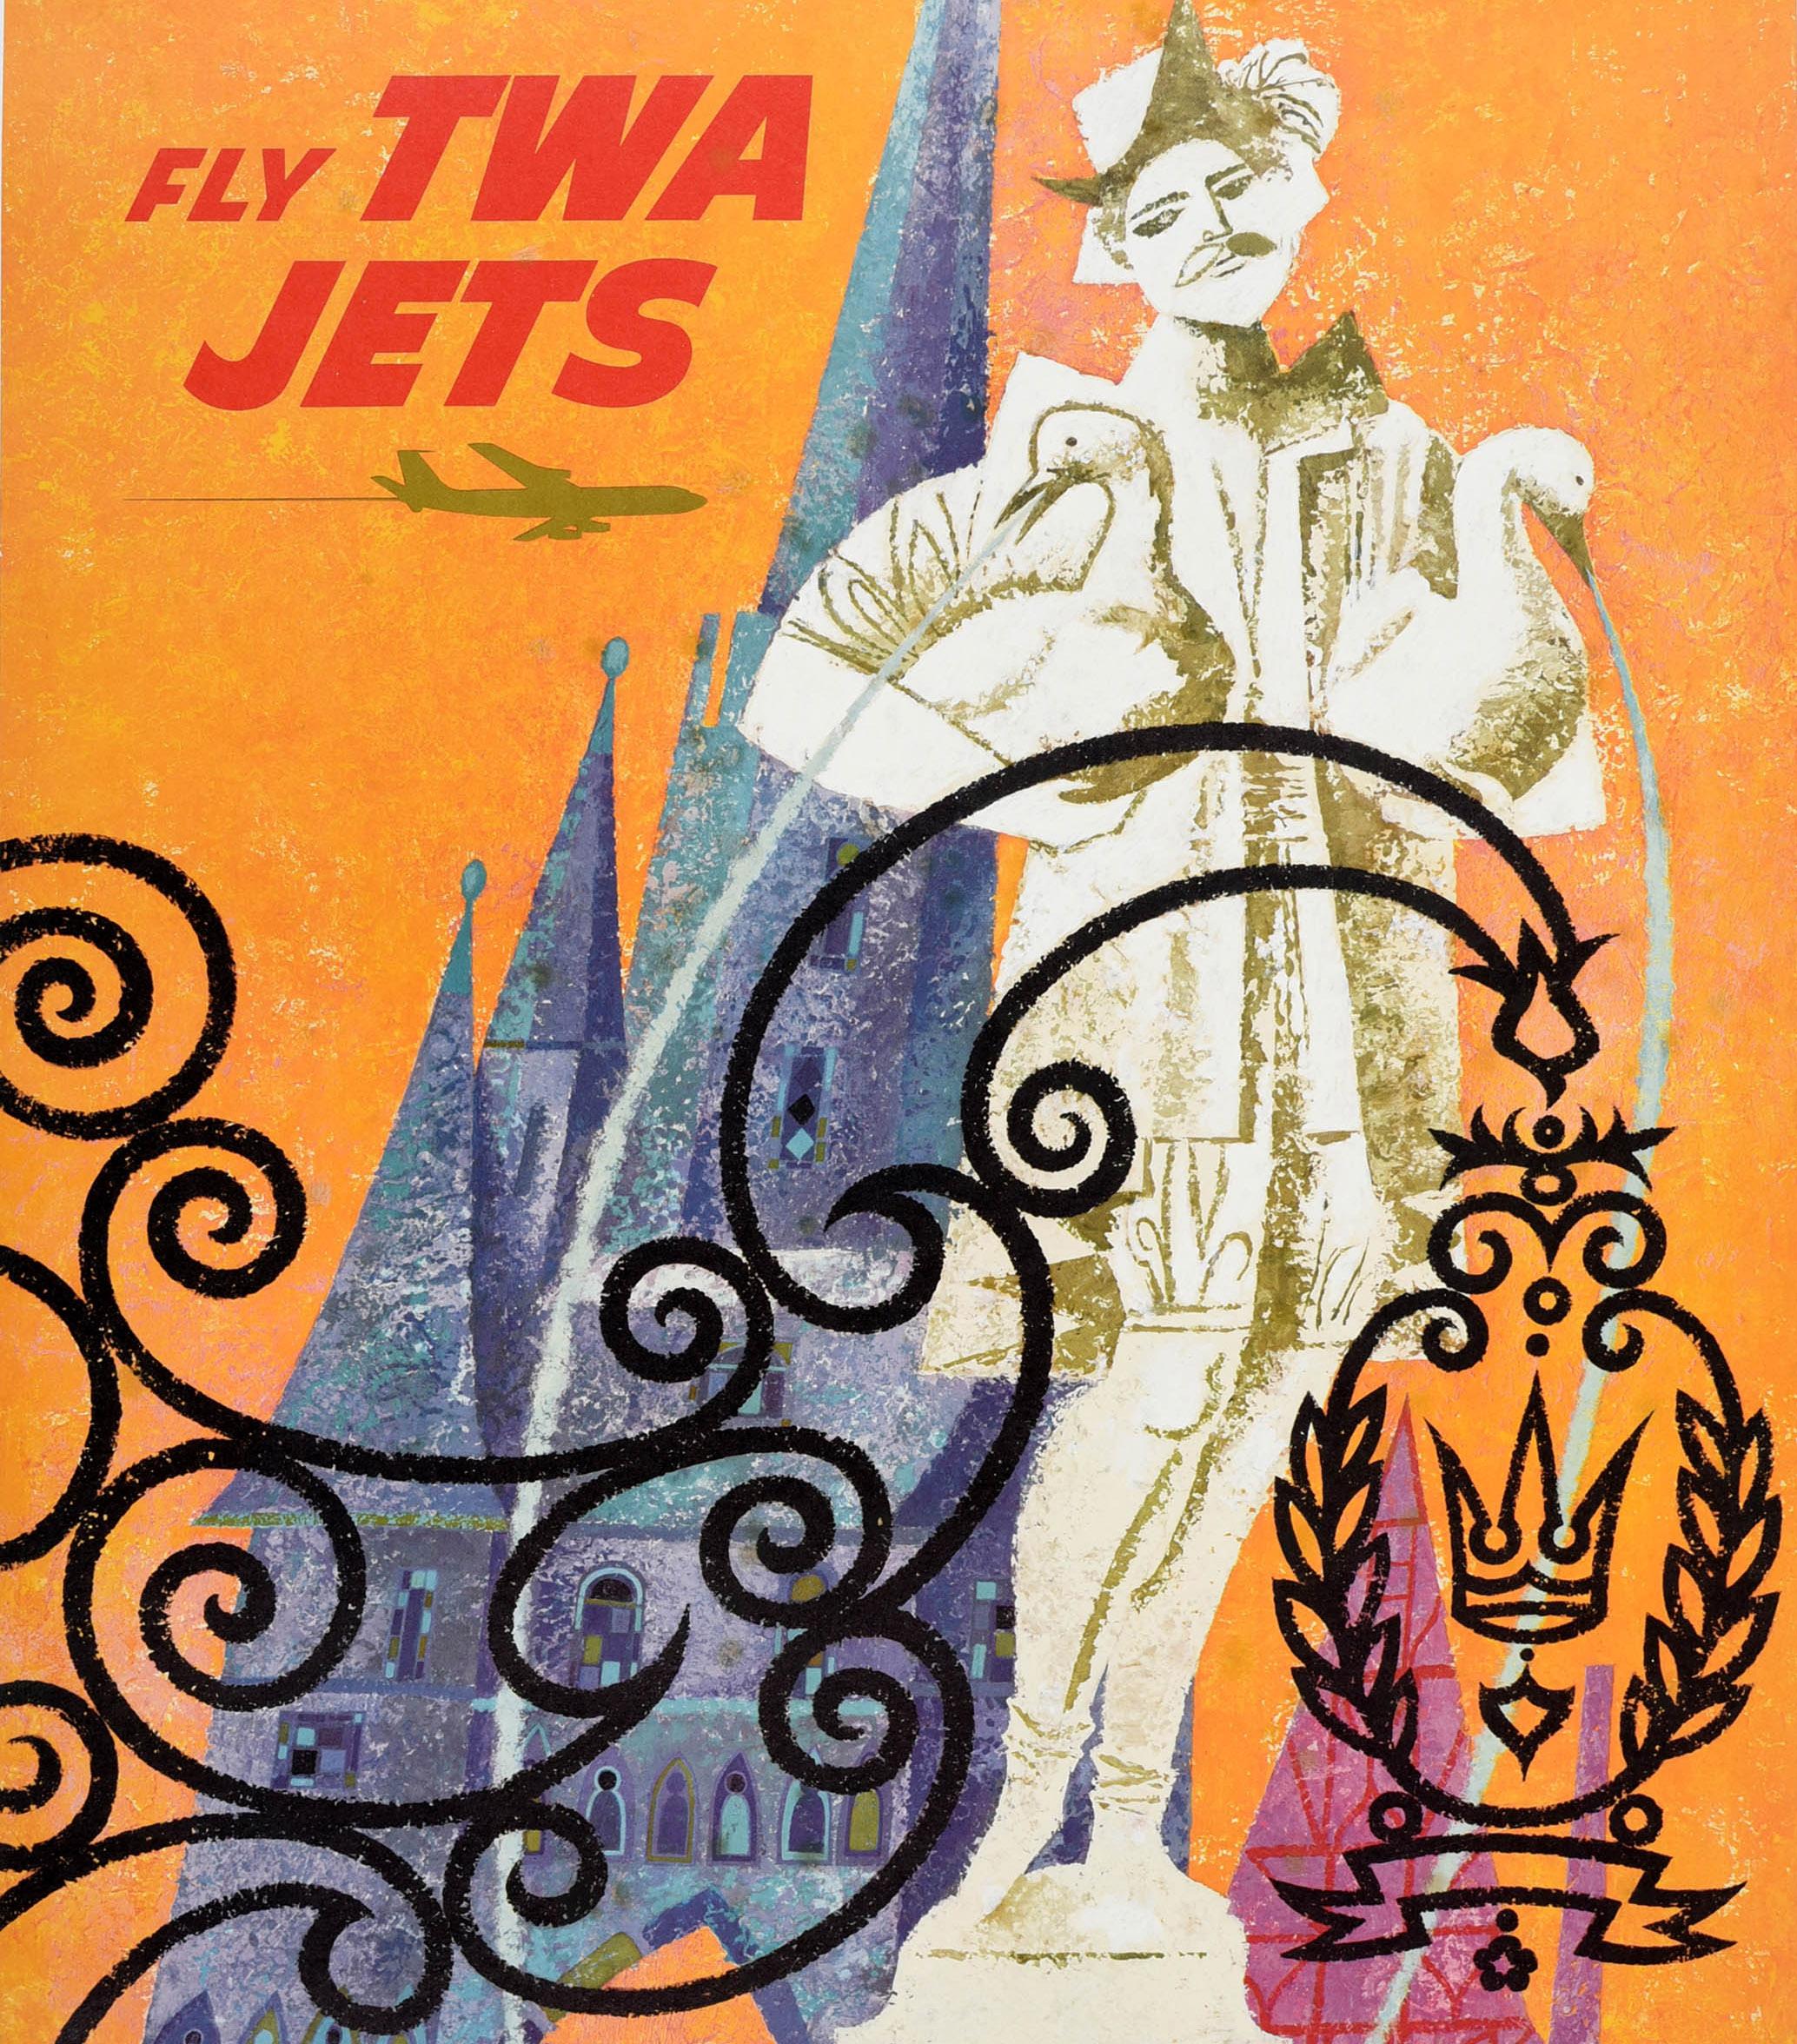 Original Vintage Travel Poster Germany Fly TWA Airline David Klein Design Art For Sale 1